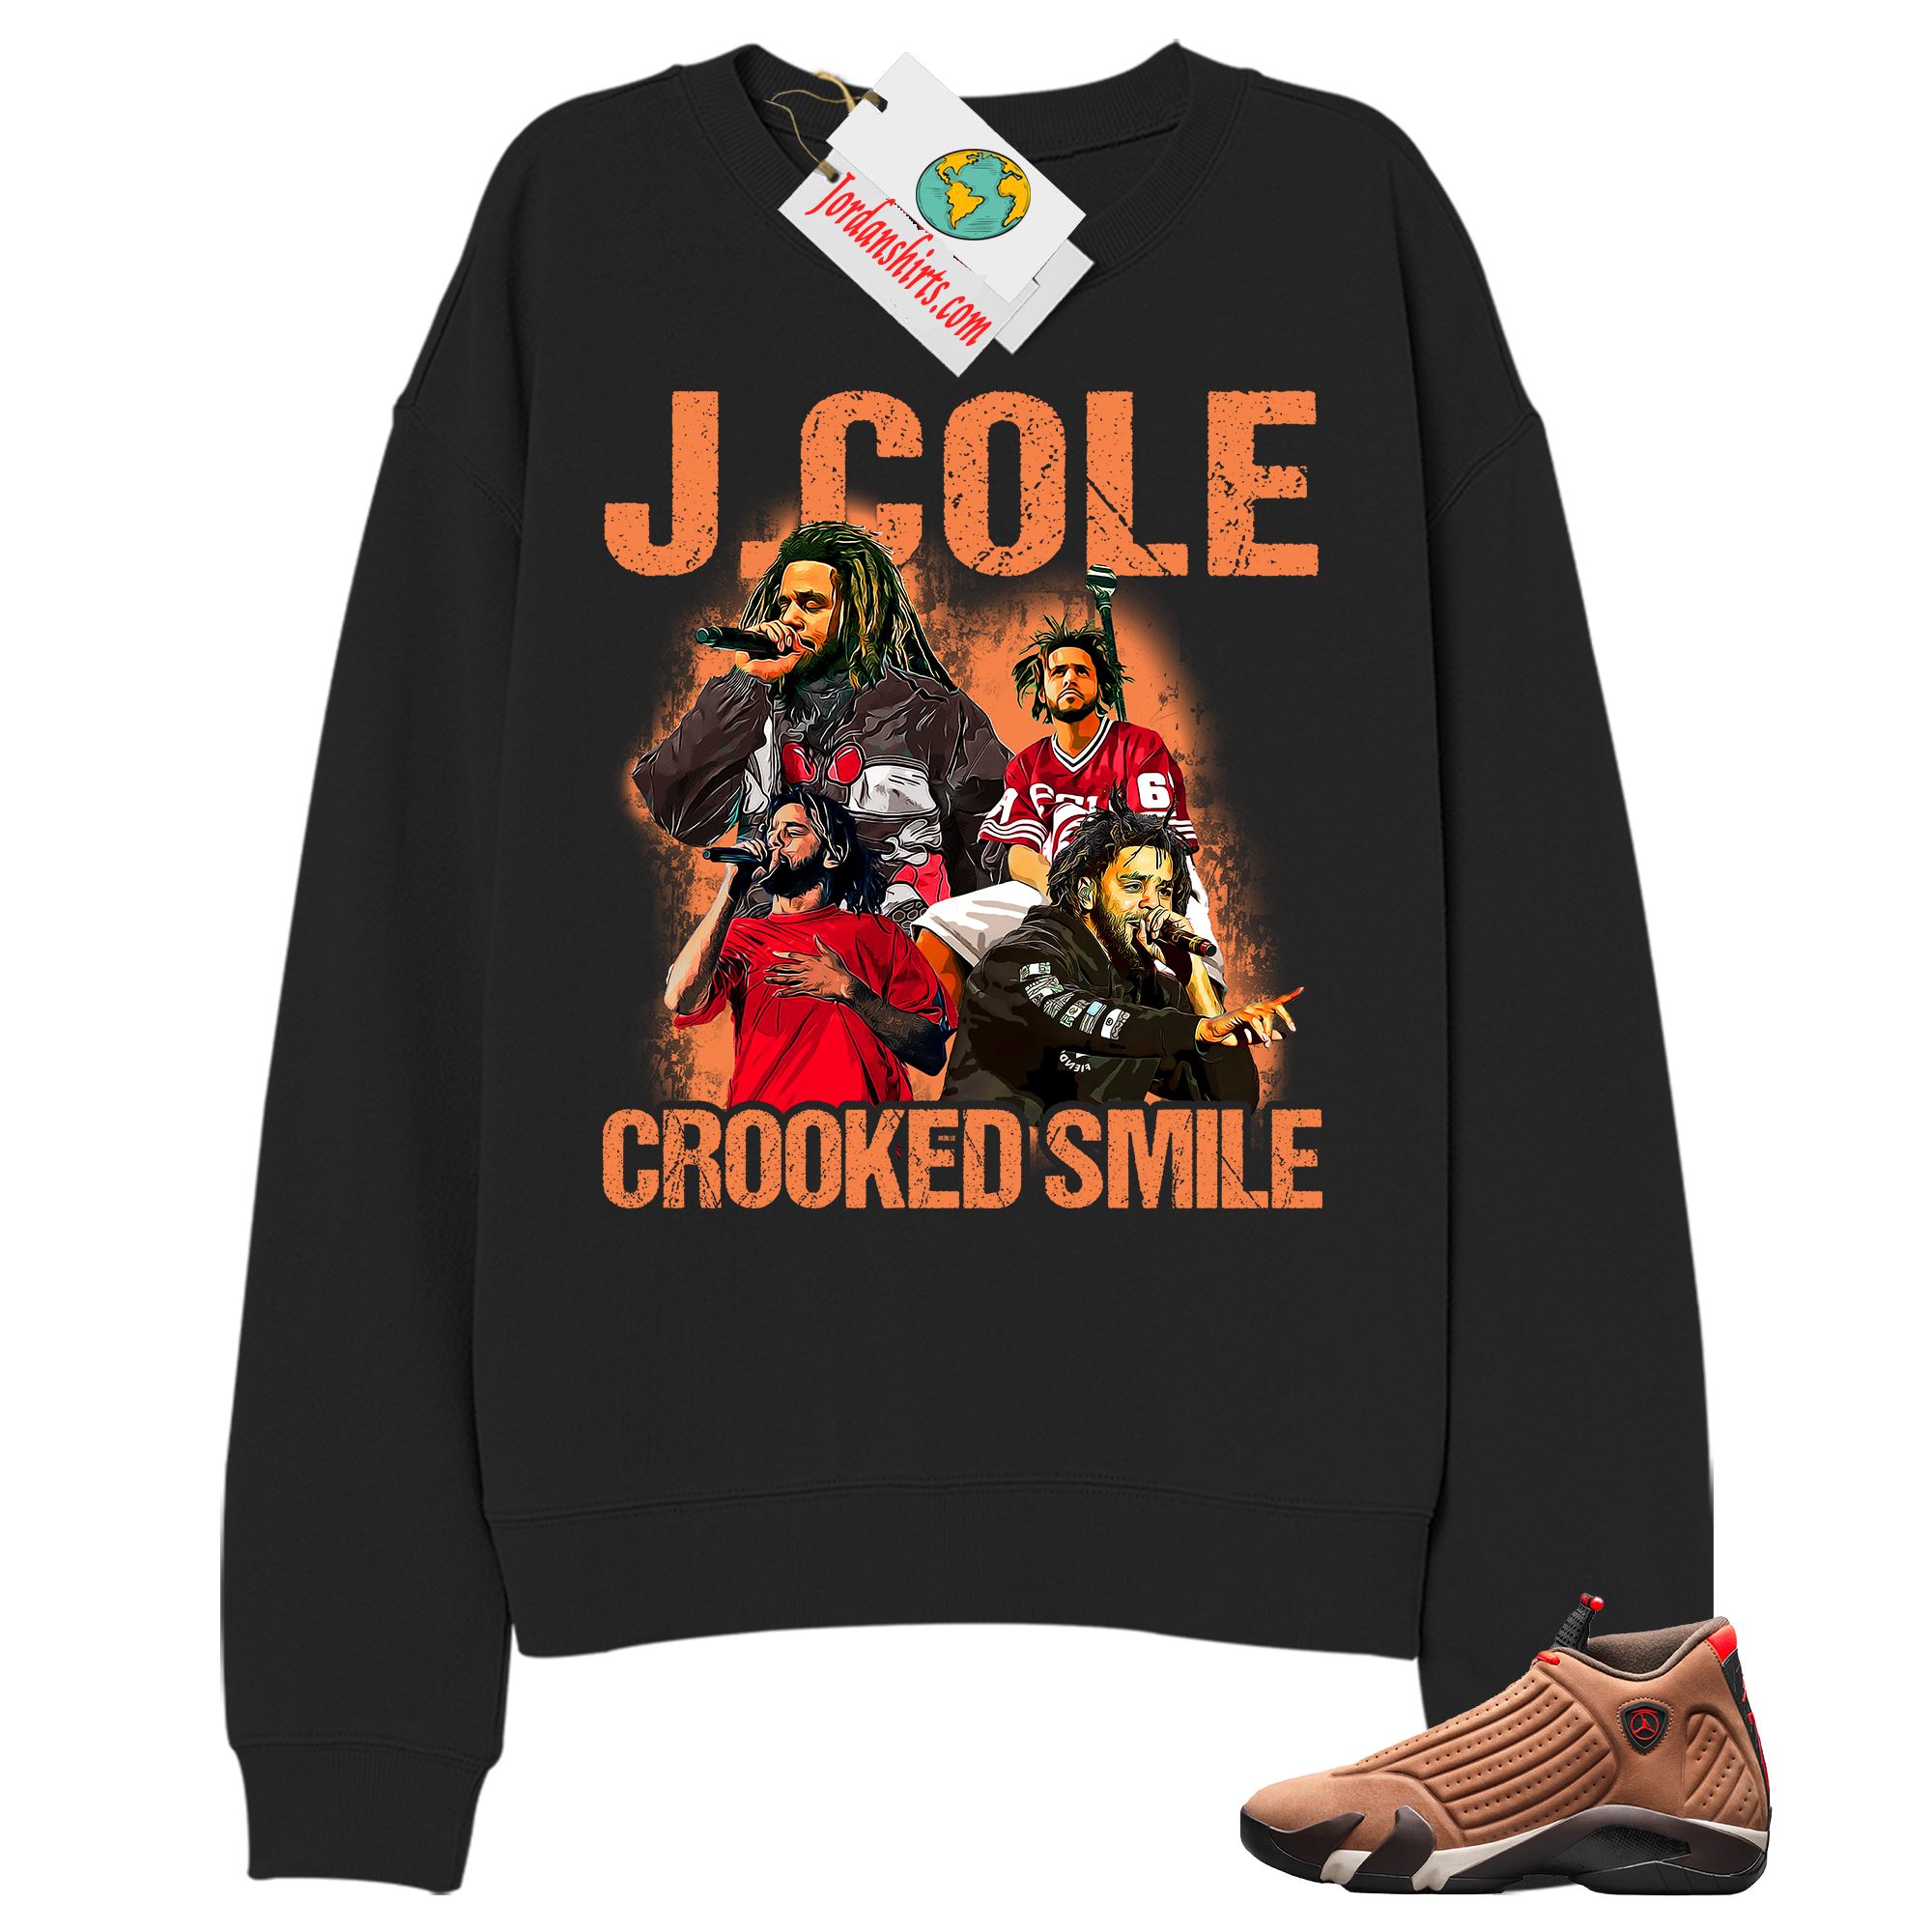 Jordan 14 Sweatshirt, J Cole Bootleg Vintage Raptee Black Sweatshirt Air Jordan 14 Winterized 14s Size Up To 5xl